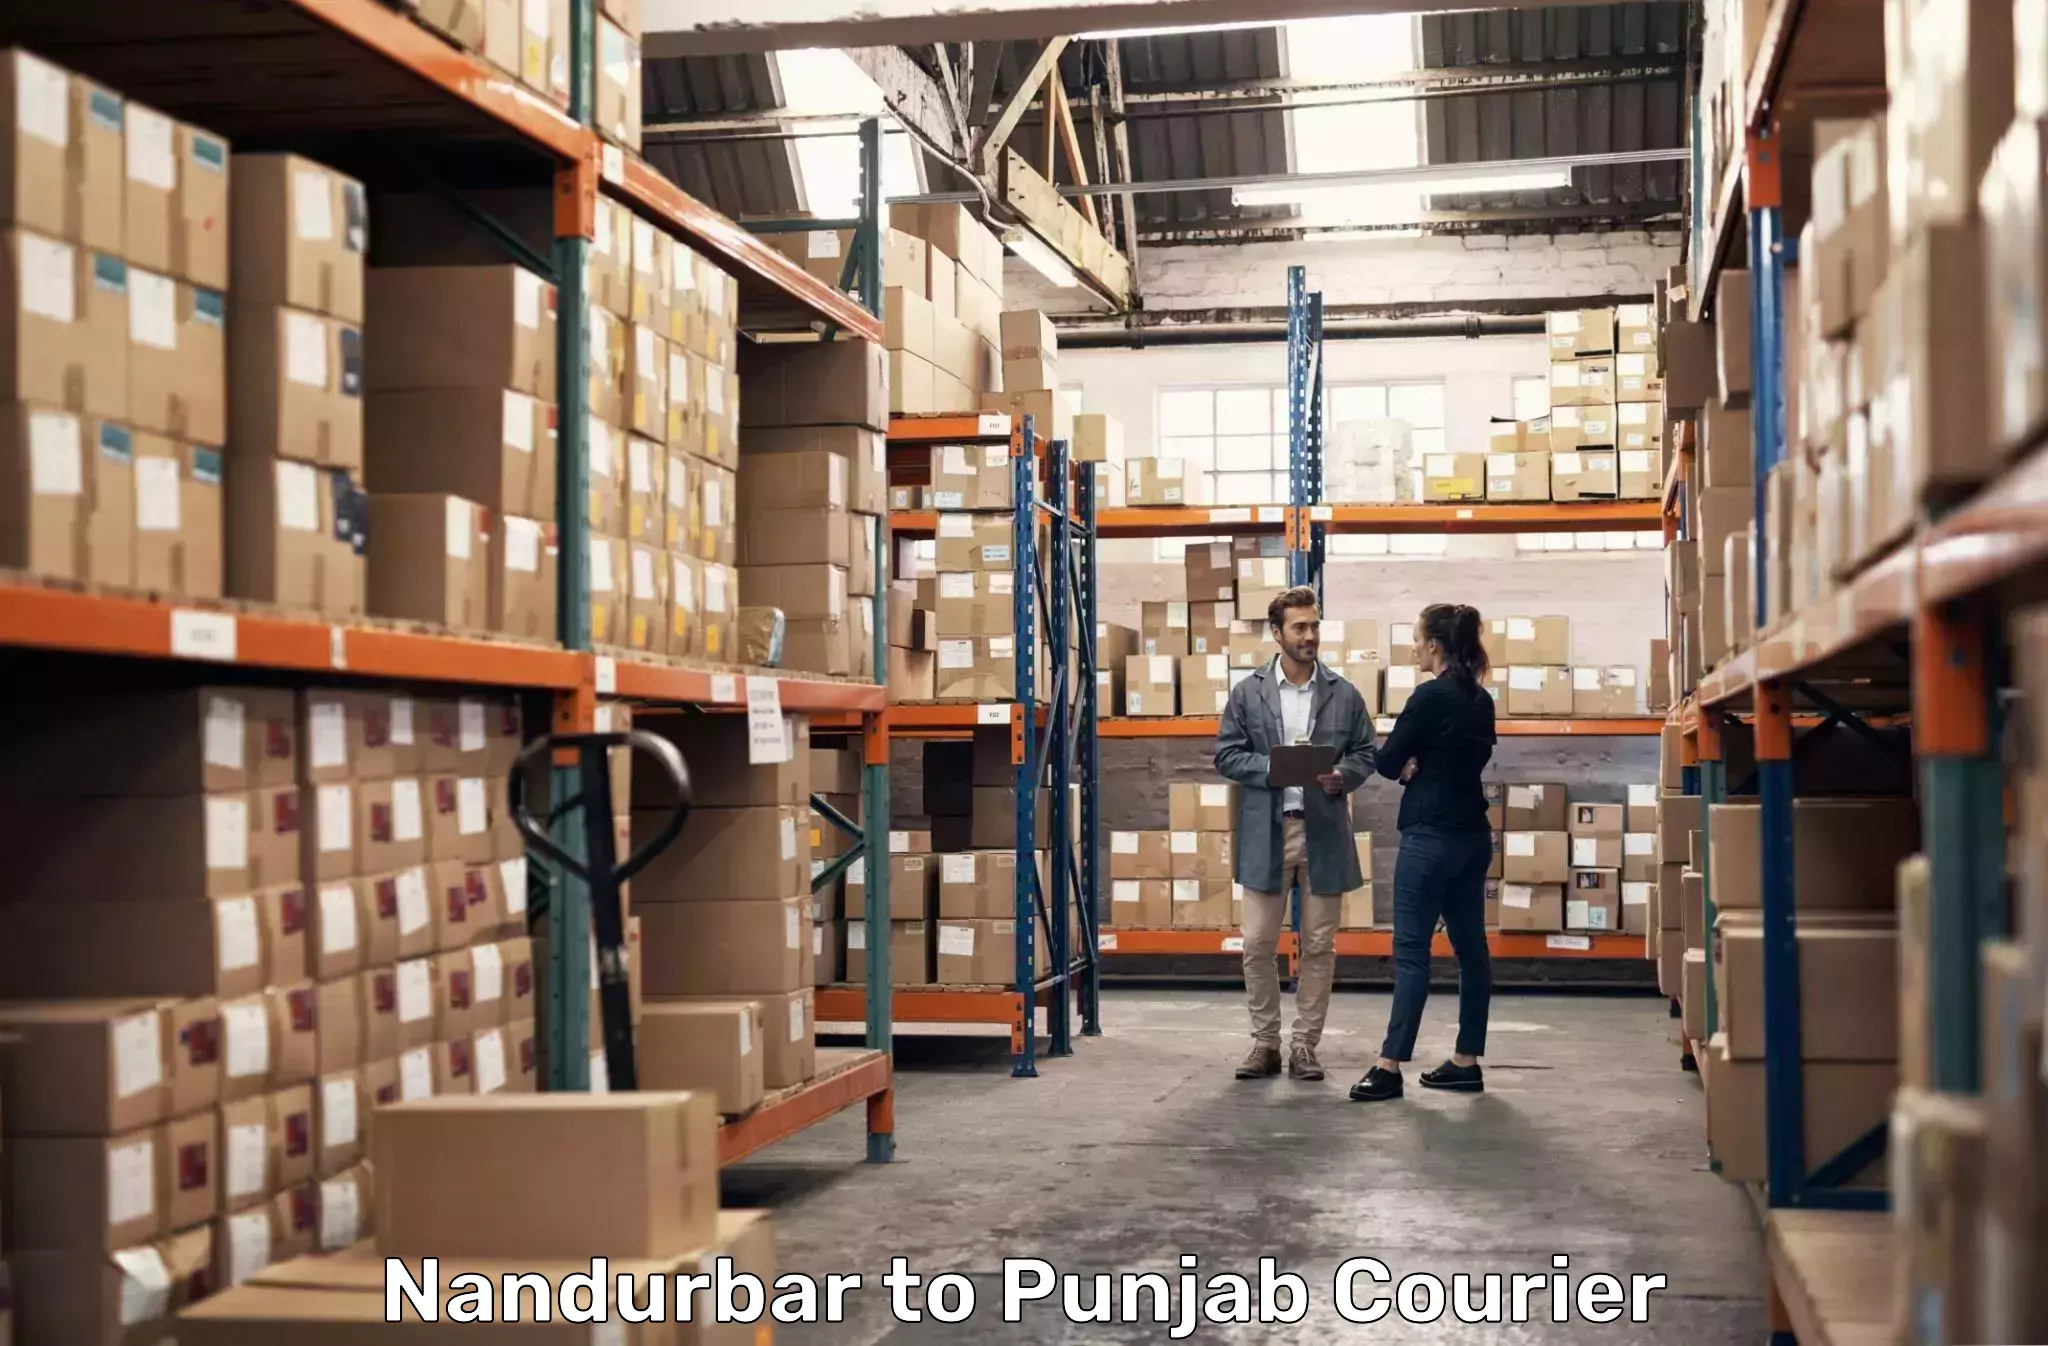 Cash on delivery service Nandurbar to Zira